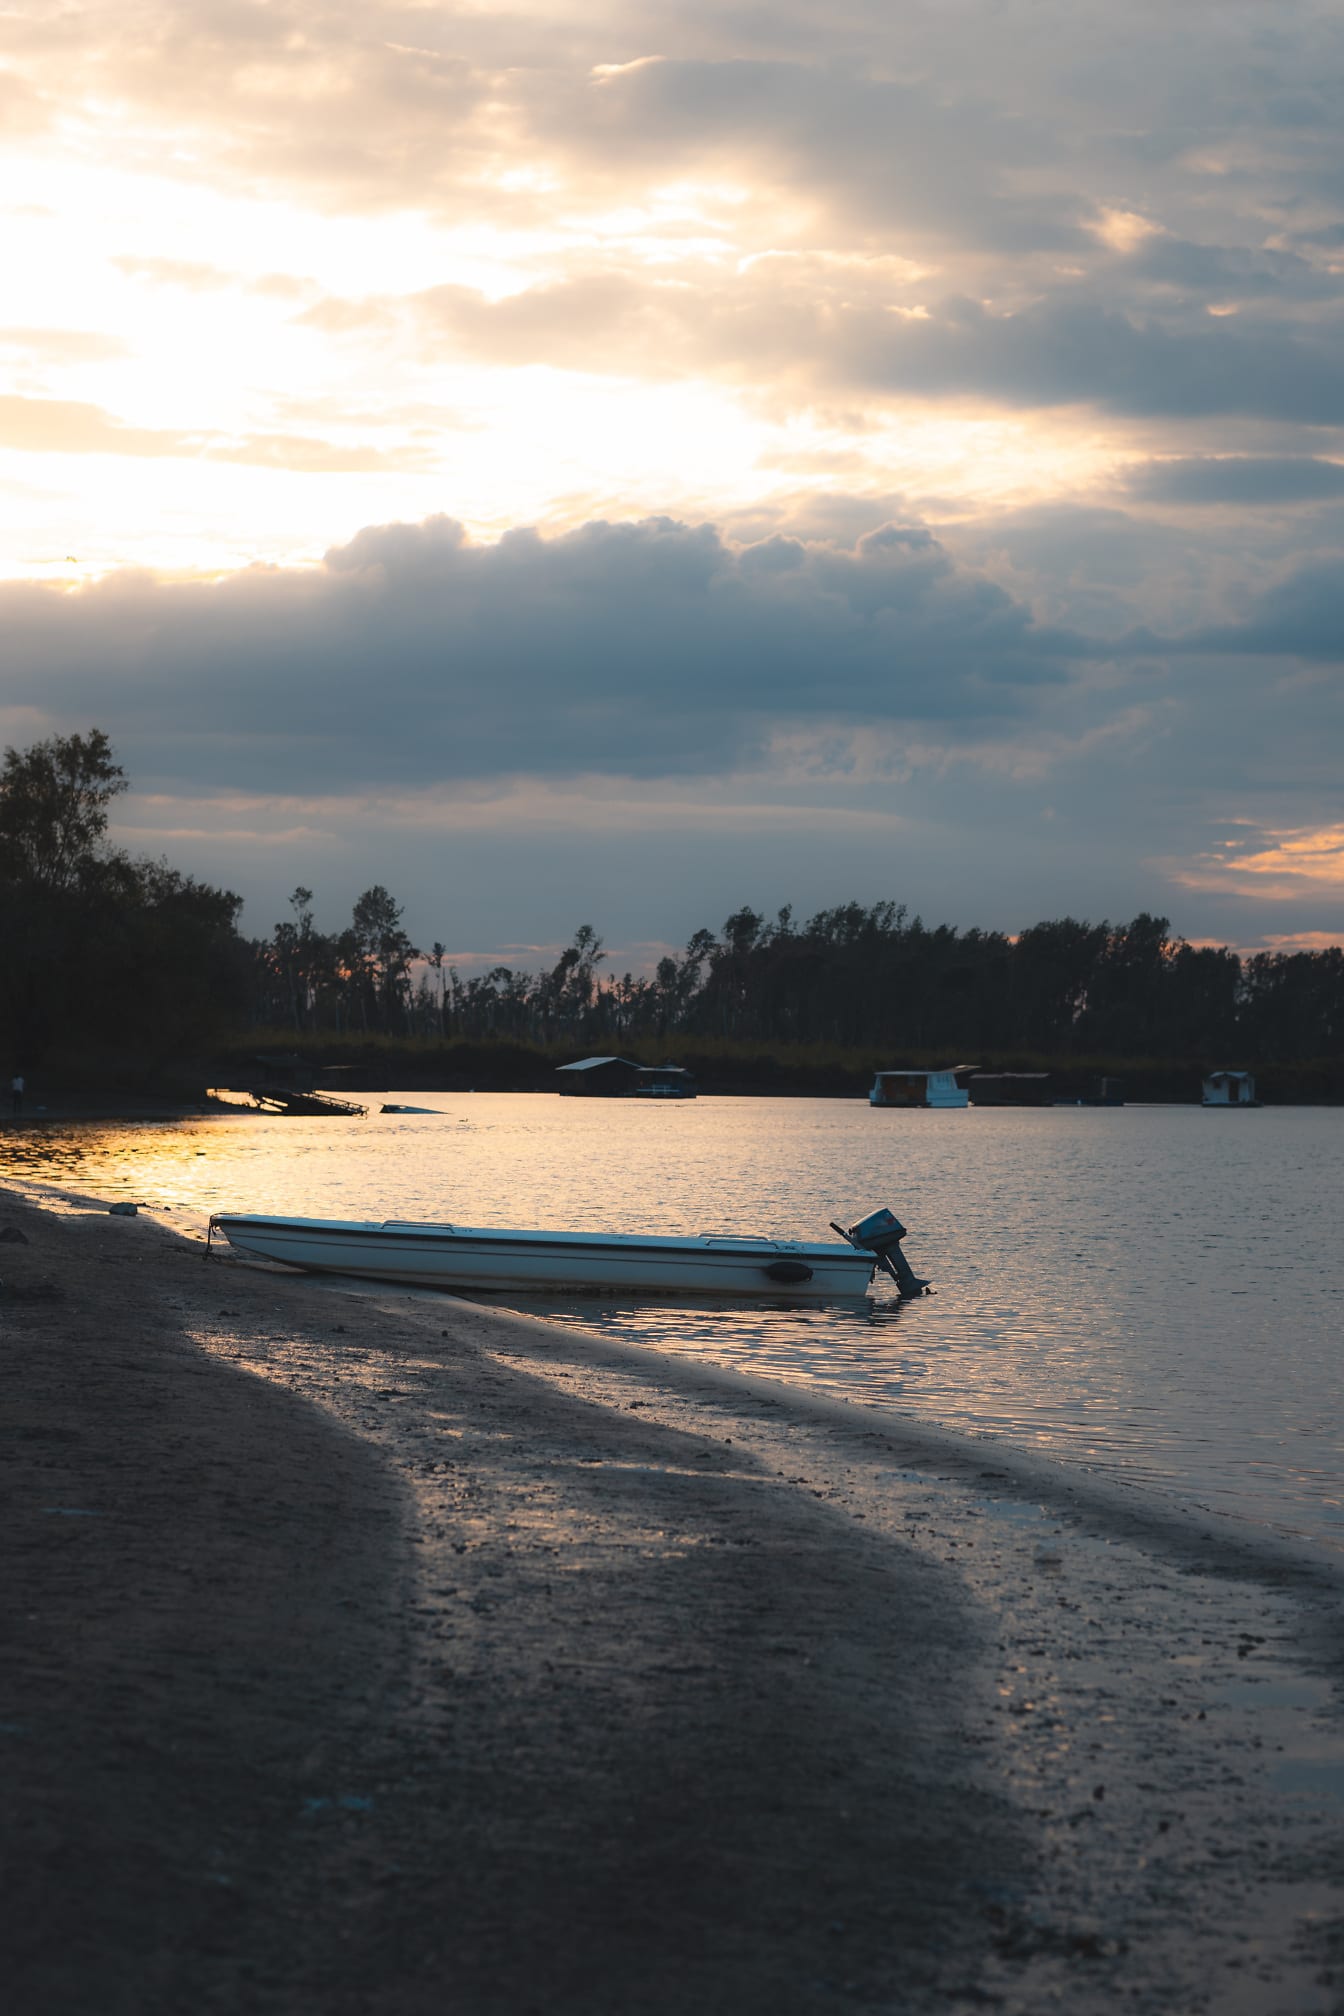 Biela rybárska loď na brehu piesočnatého jazera za súmraku so zamračenou oblohou